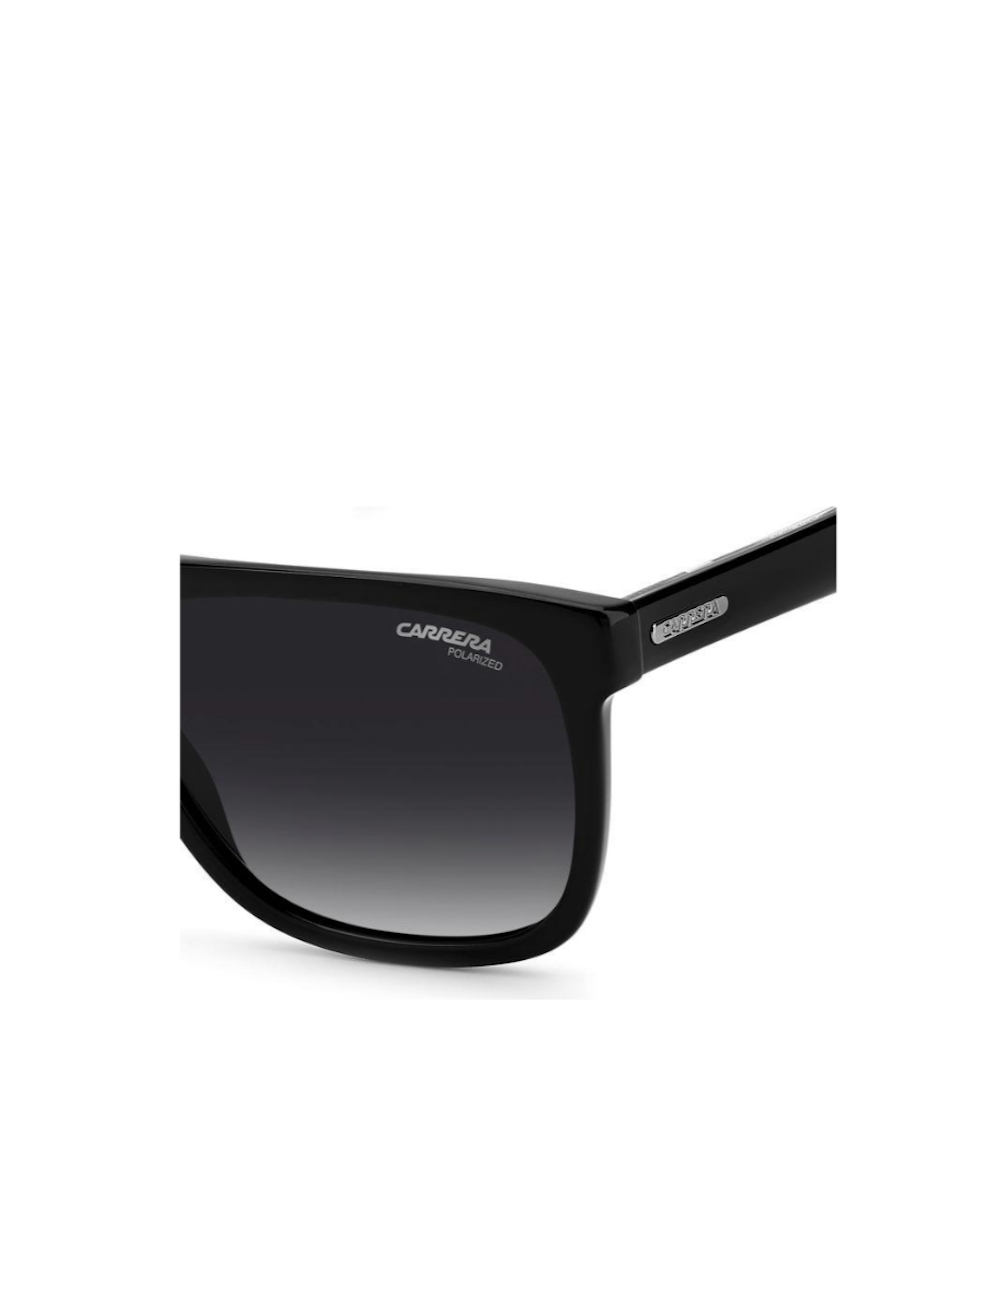 Total 80+ imagen carrera polarized sunglasses price